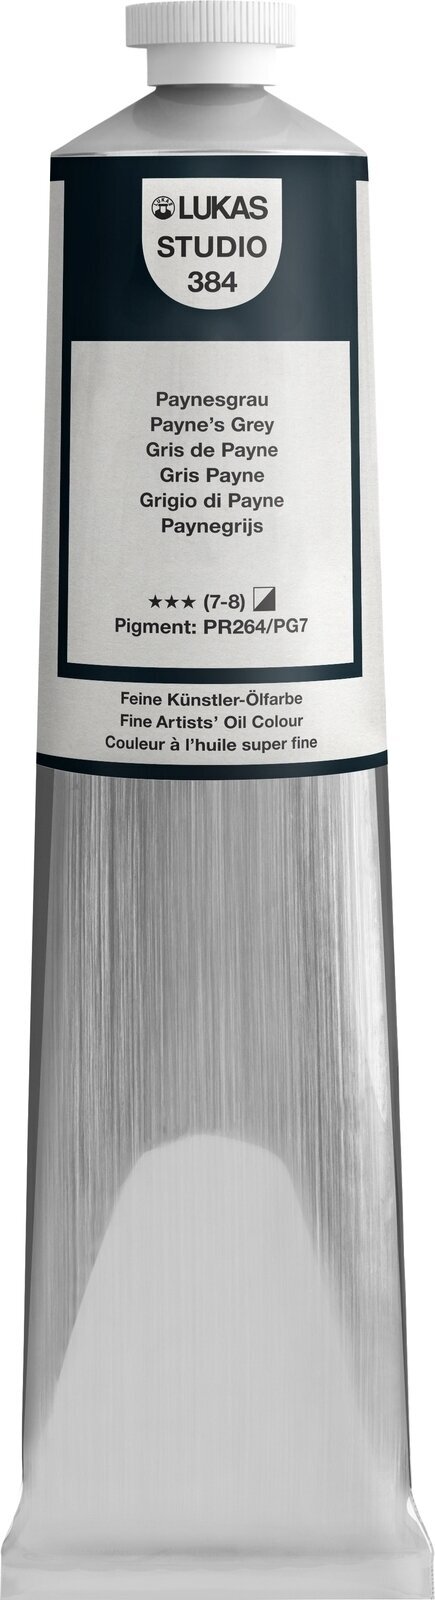 Ölfarbe Lukas Studio Oil Paint Aluminium Tube Ölgemälde Payne's Grey 200 ml 1 Stck